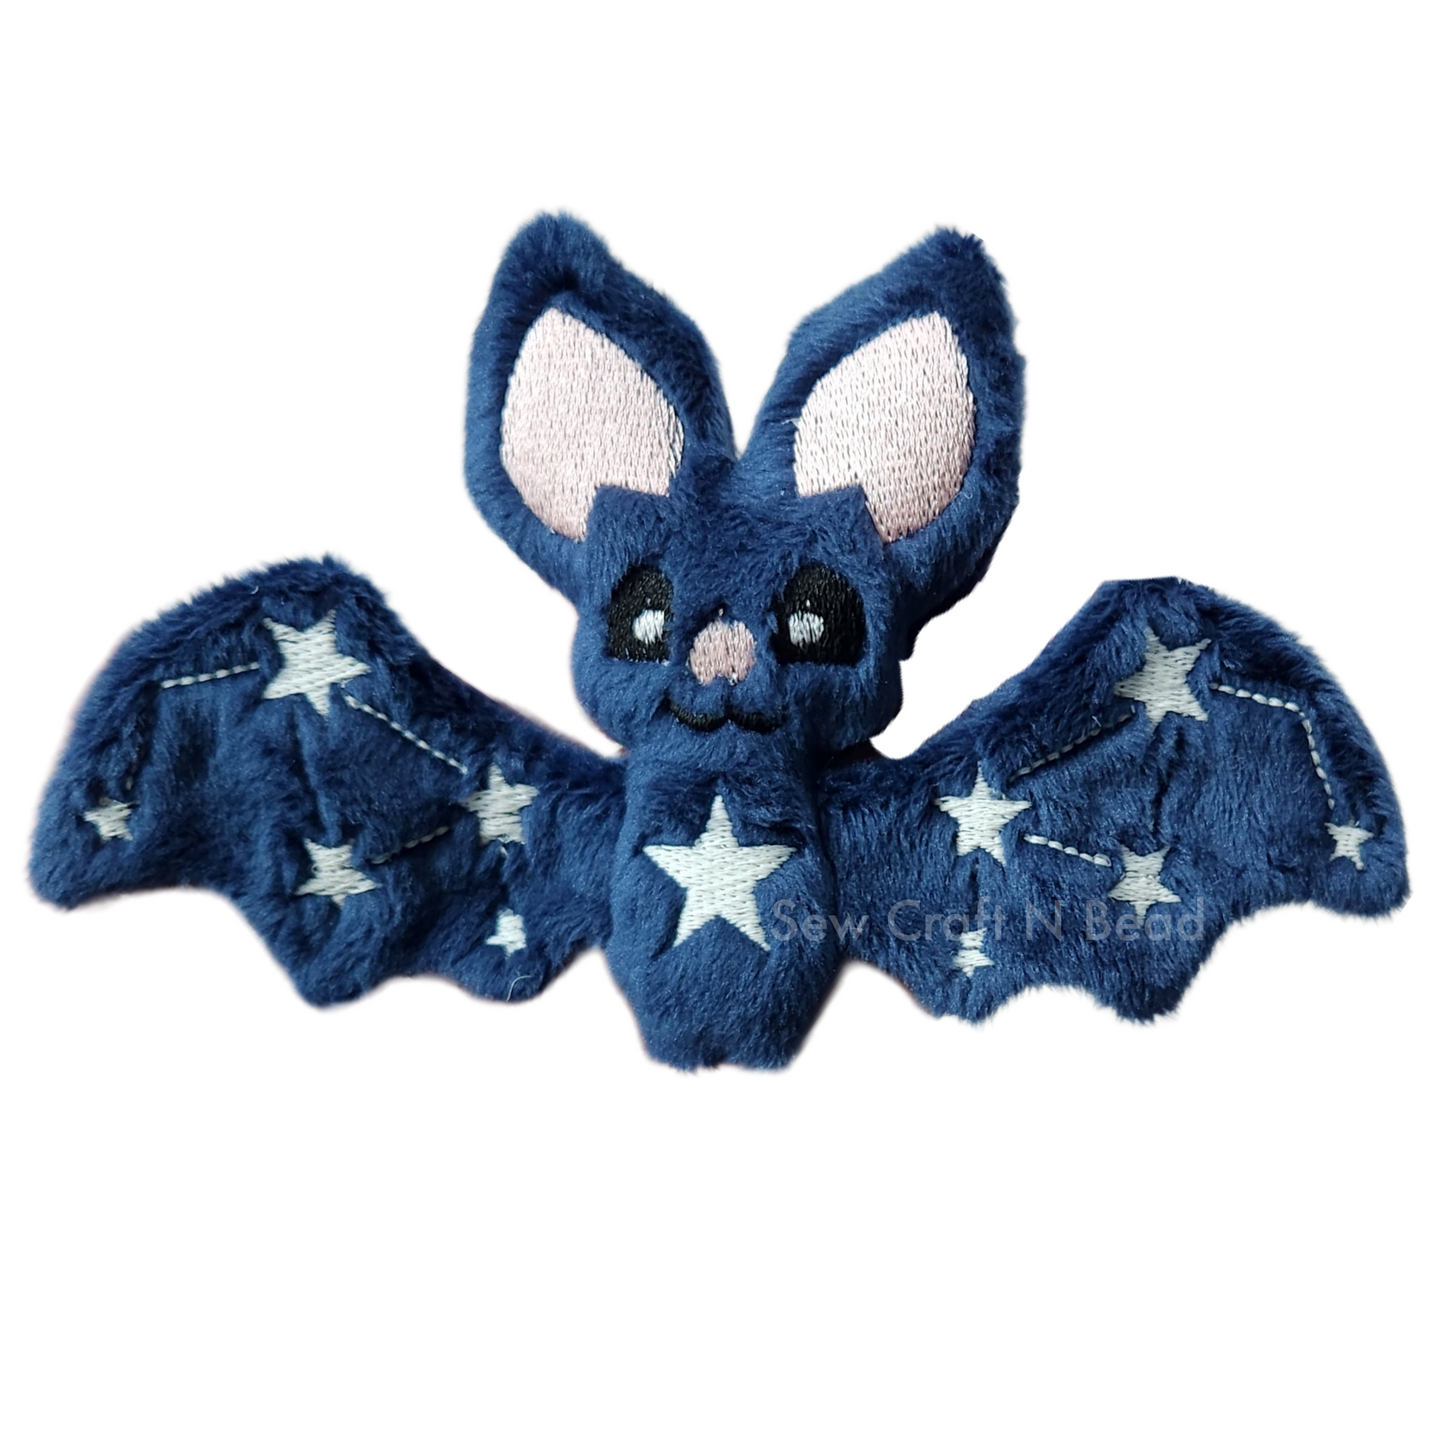 Star Glow In the Dark Bat Plush (Made to Order)